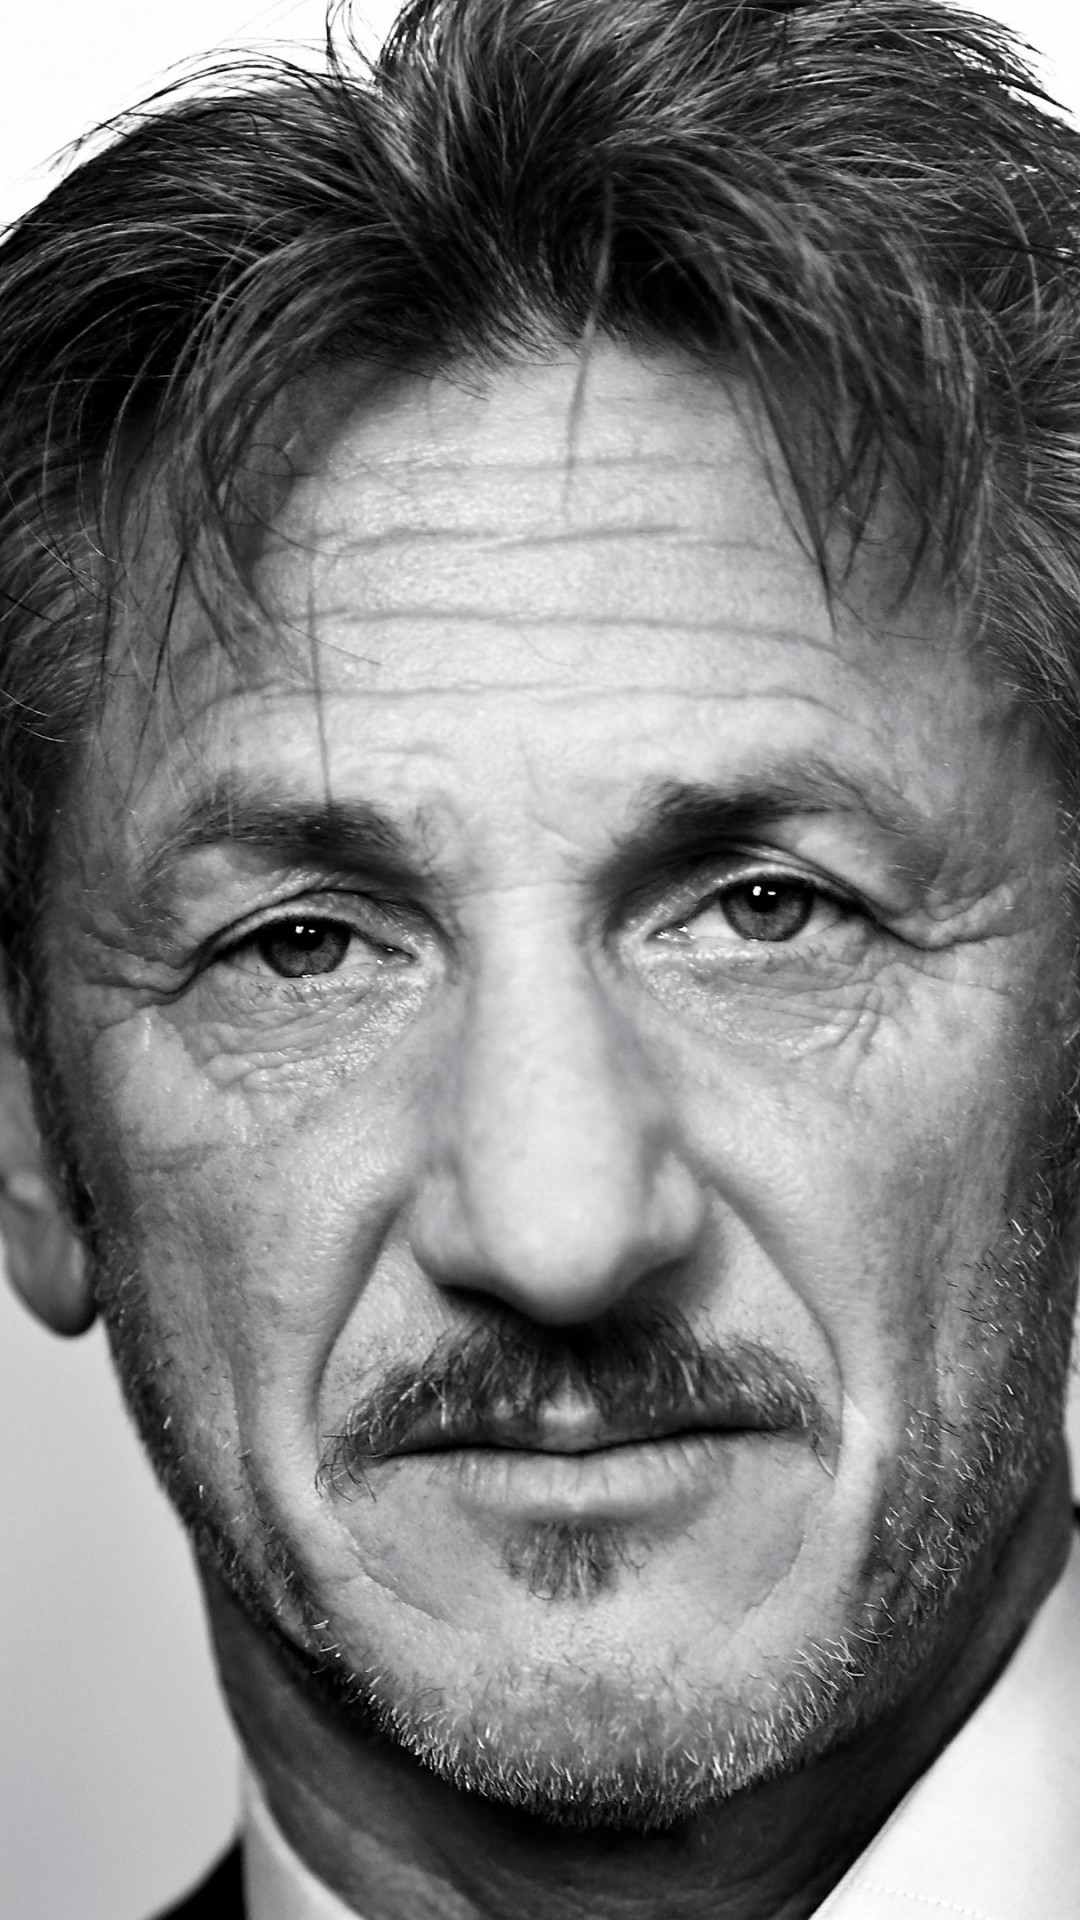 Sean Penn Portrait in Black & White Wallpaper for HTC One